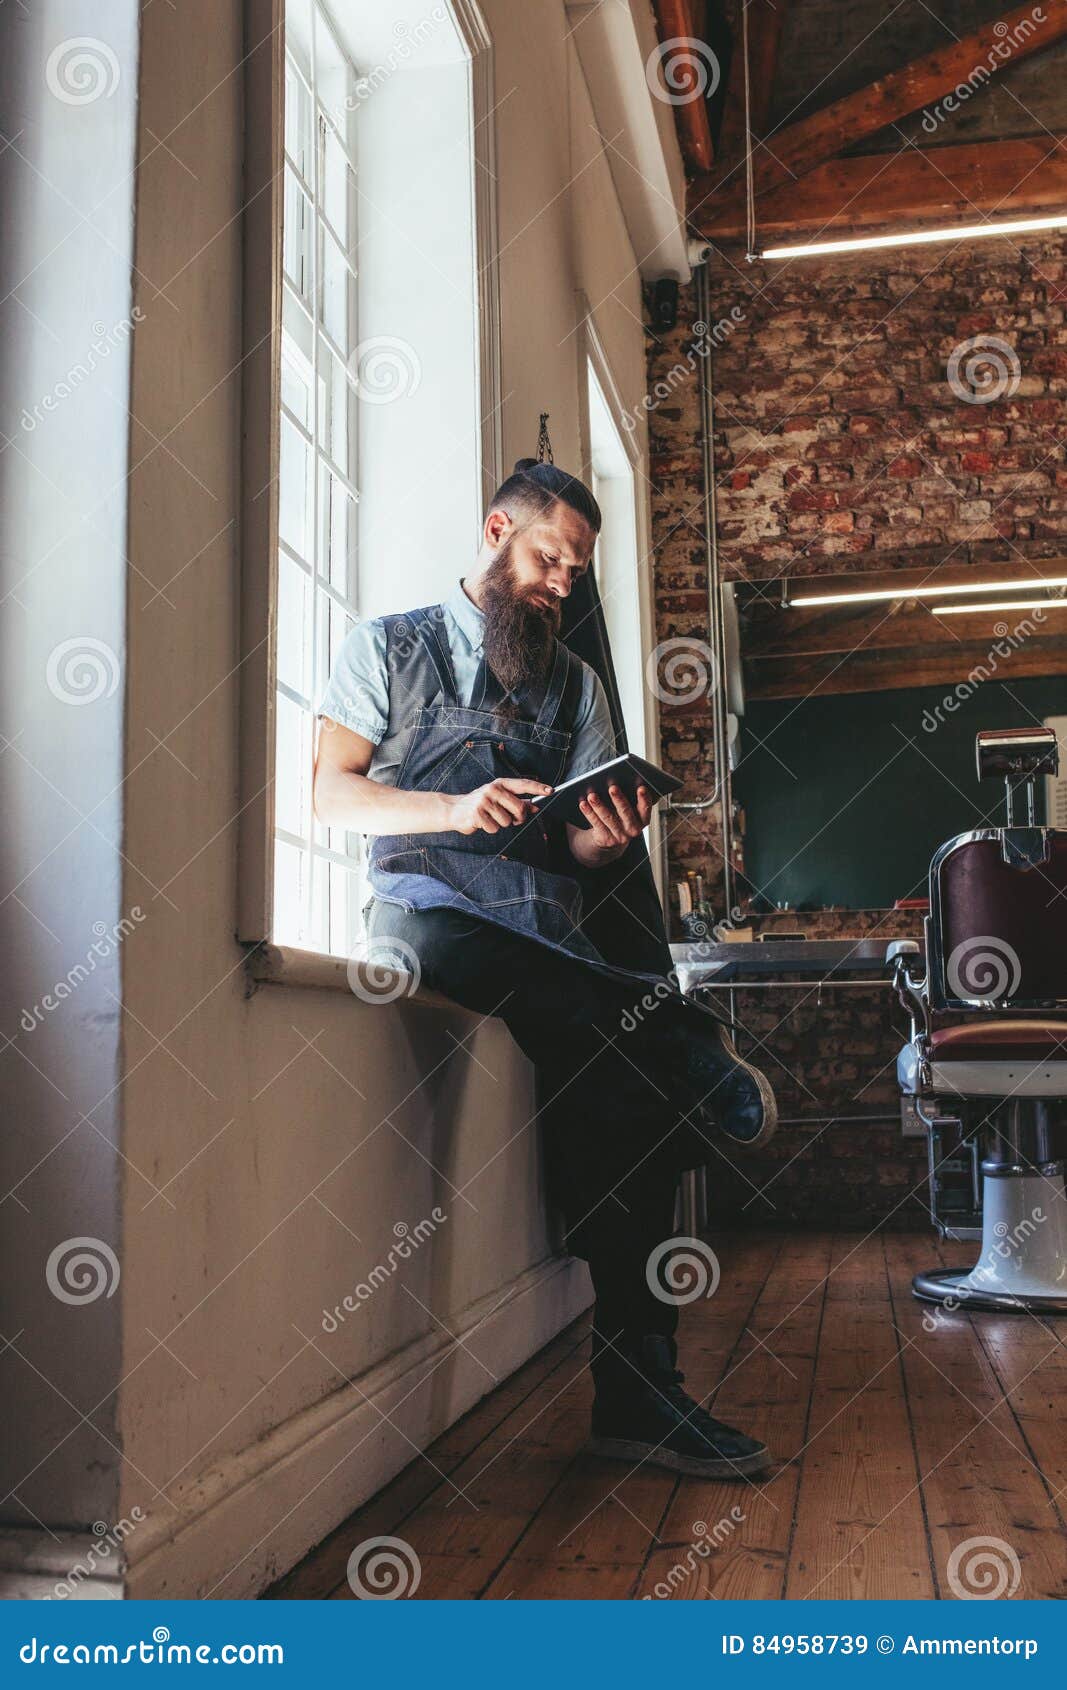 Young Barber at His Barbershop Using Digital Tablet Stock Image - Image ...